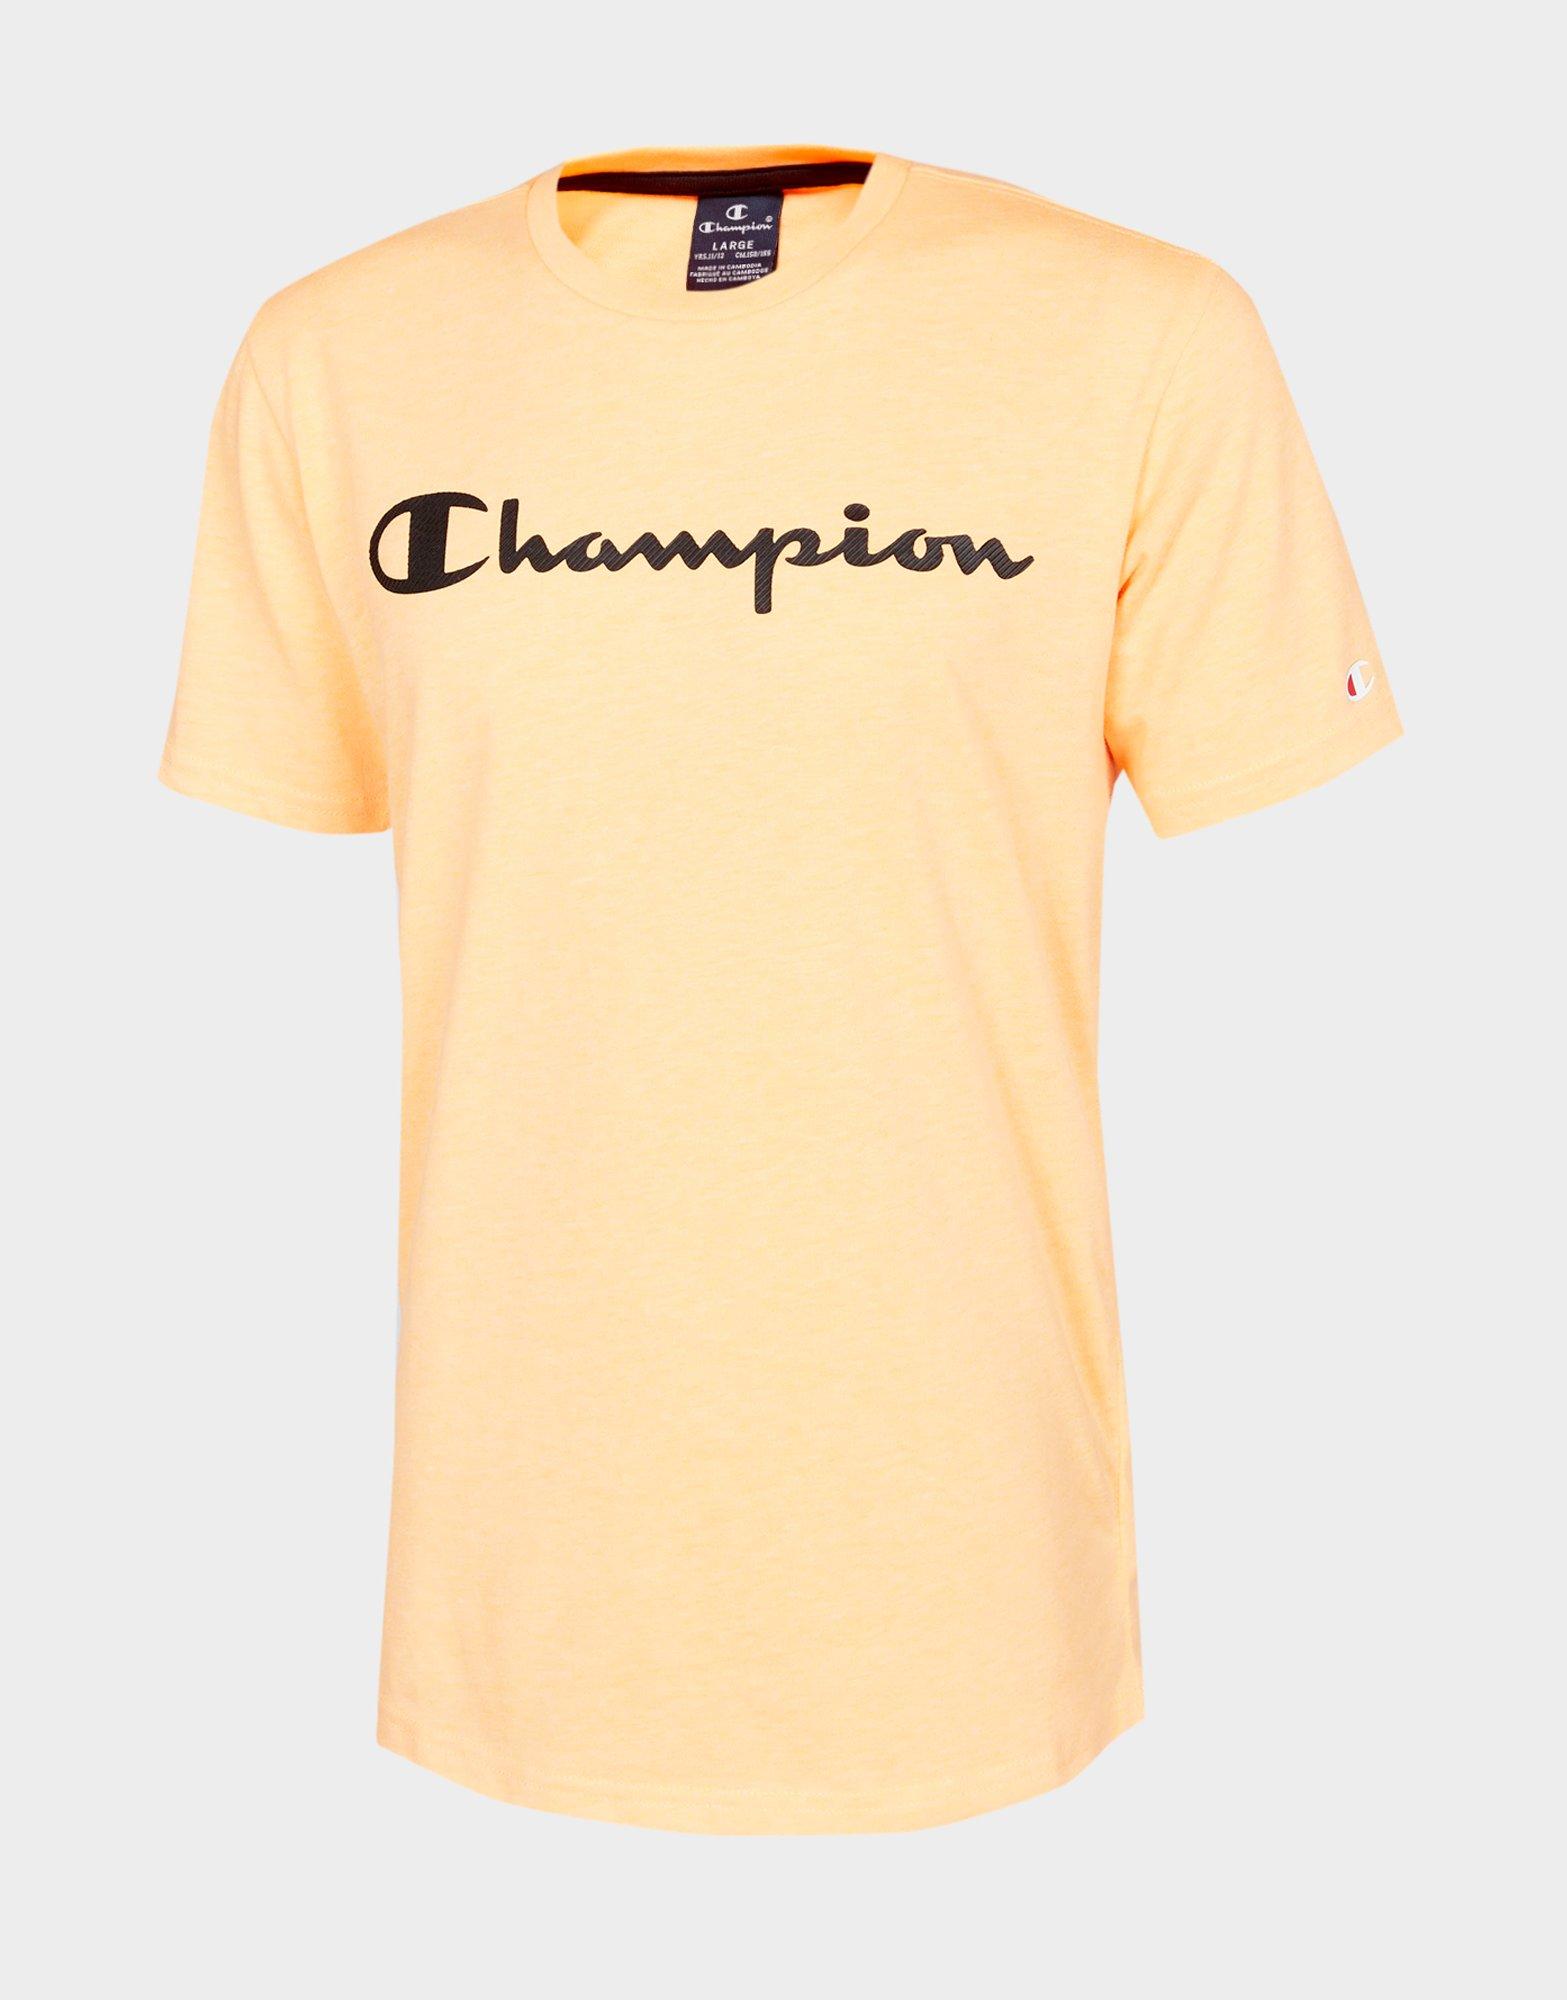 orange champion shirt